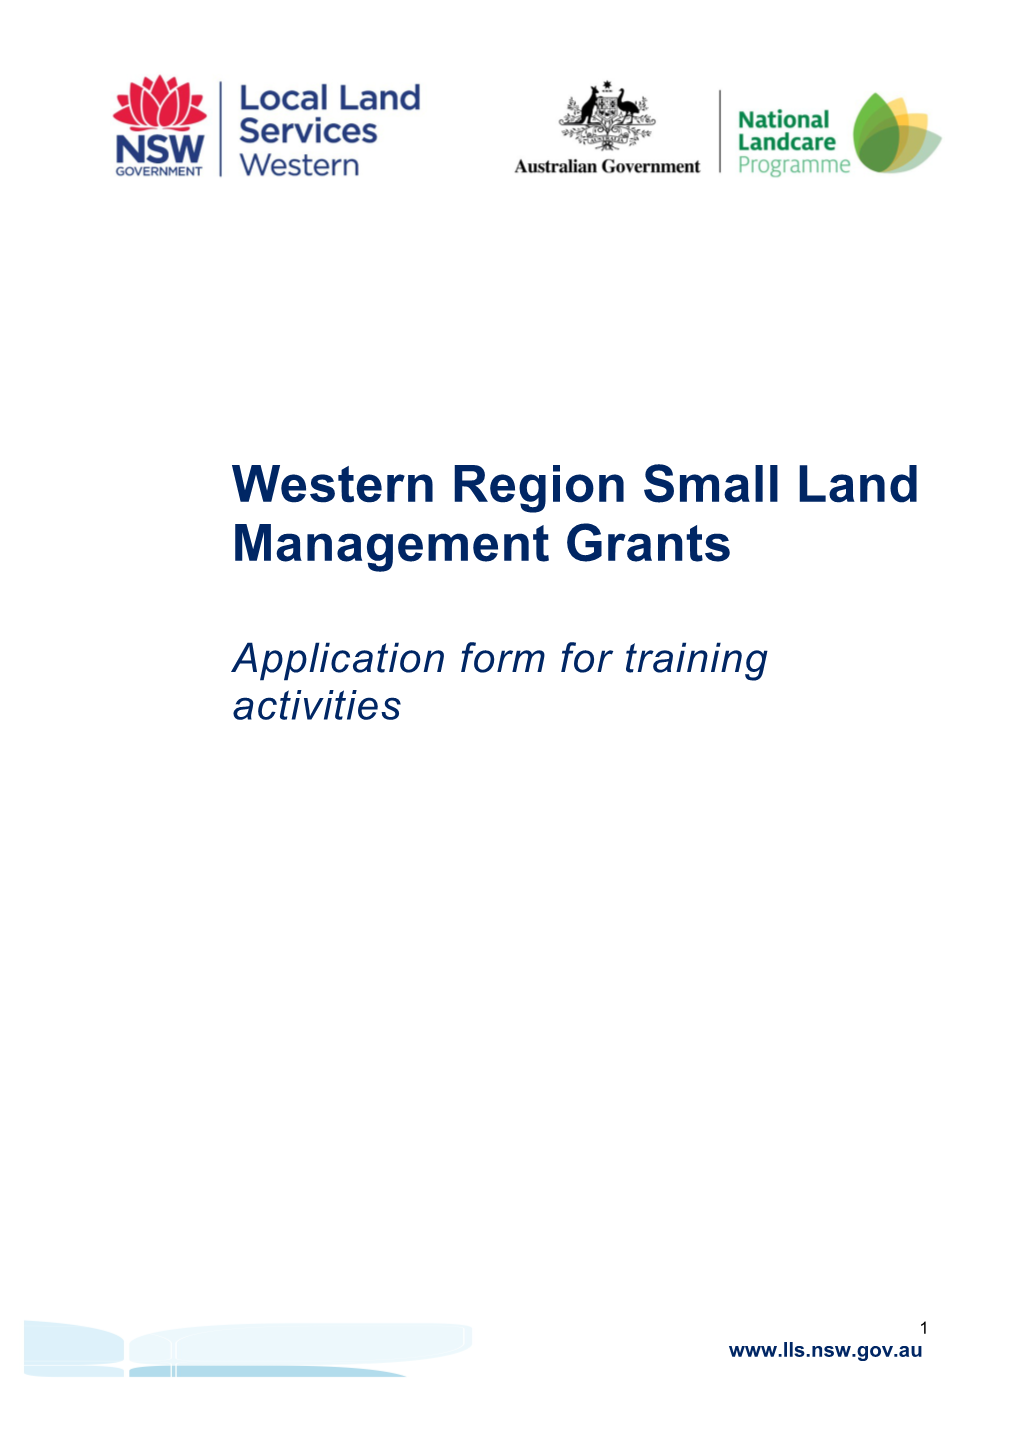 Western Region Small Land Management Grants